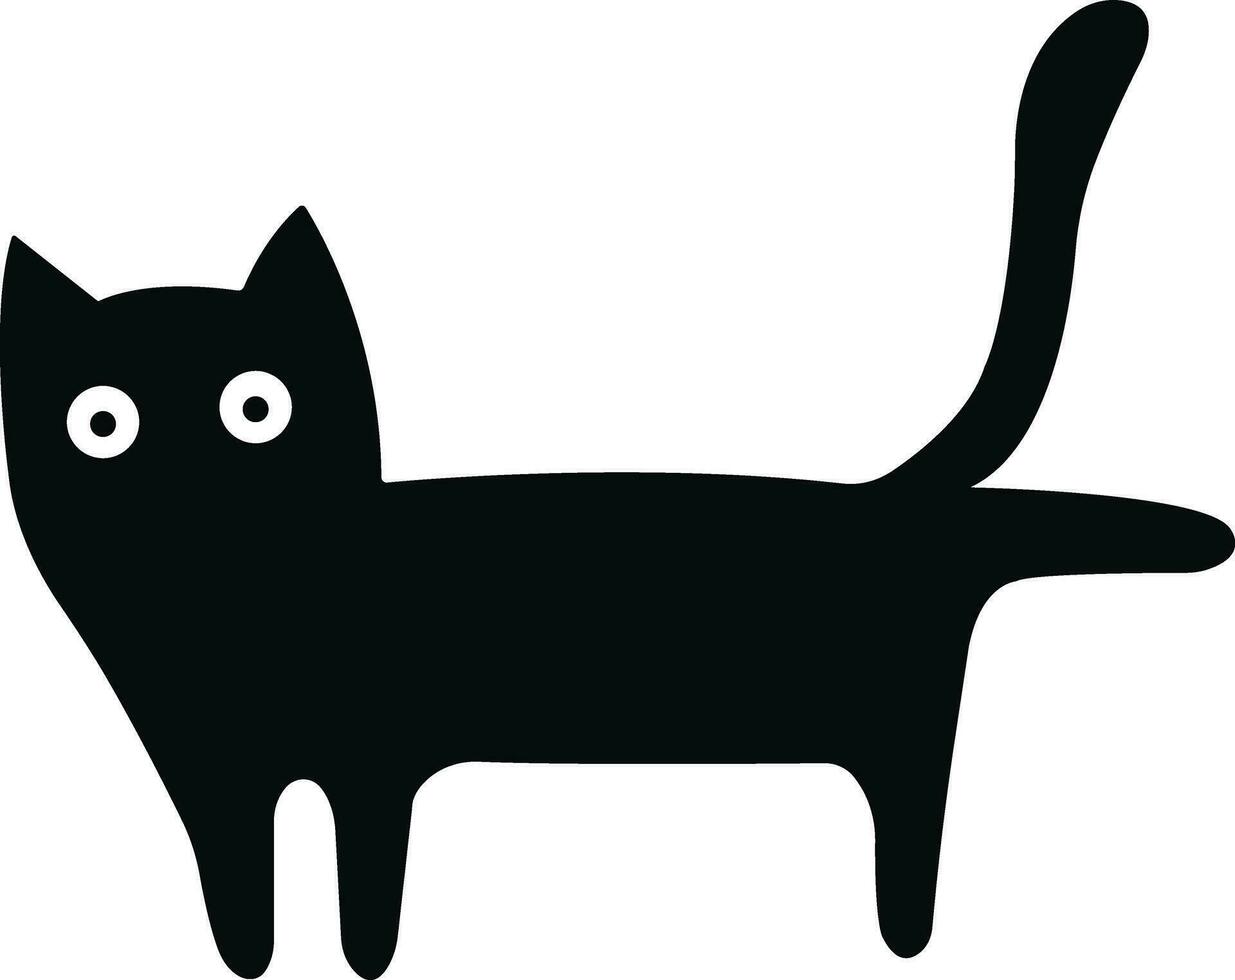 gato icono en plano de moda estilo. aislado en transparente antecedentes. gato silueta firmar símbolo. móvil concepto y web diseño. casa animales símbolo logo vector gráficos